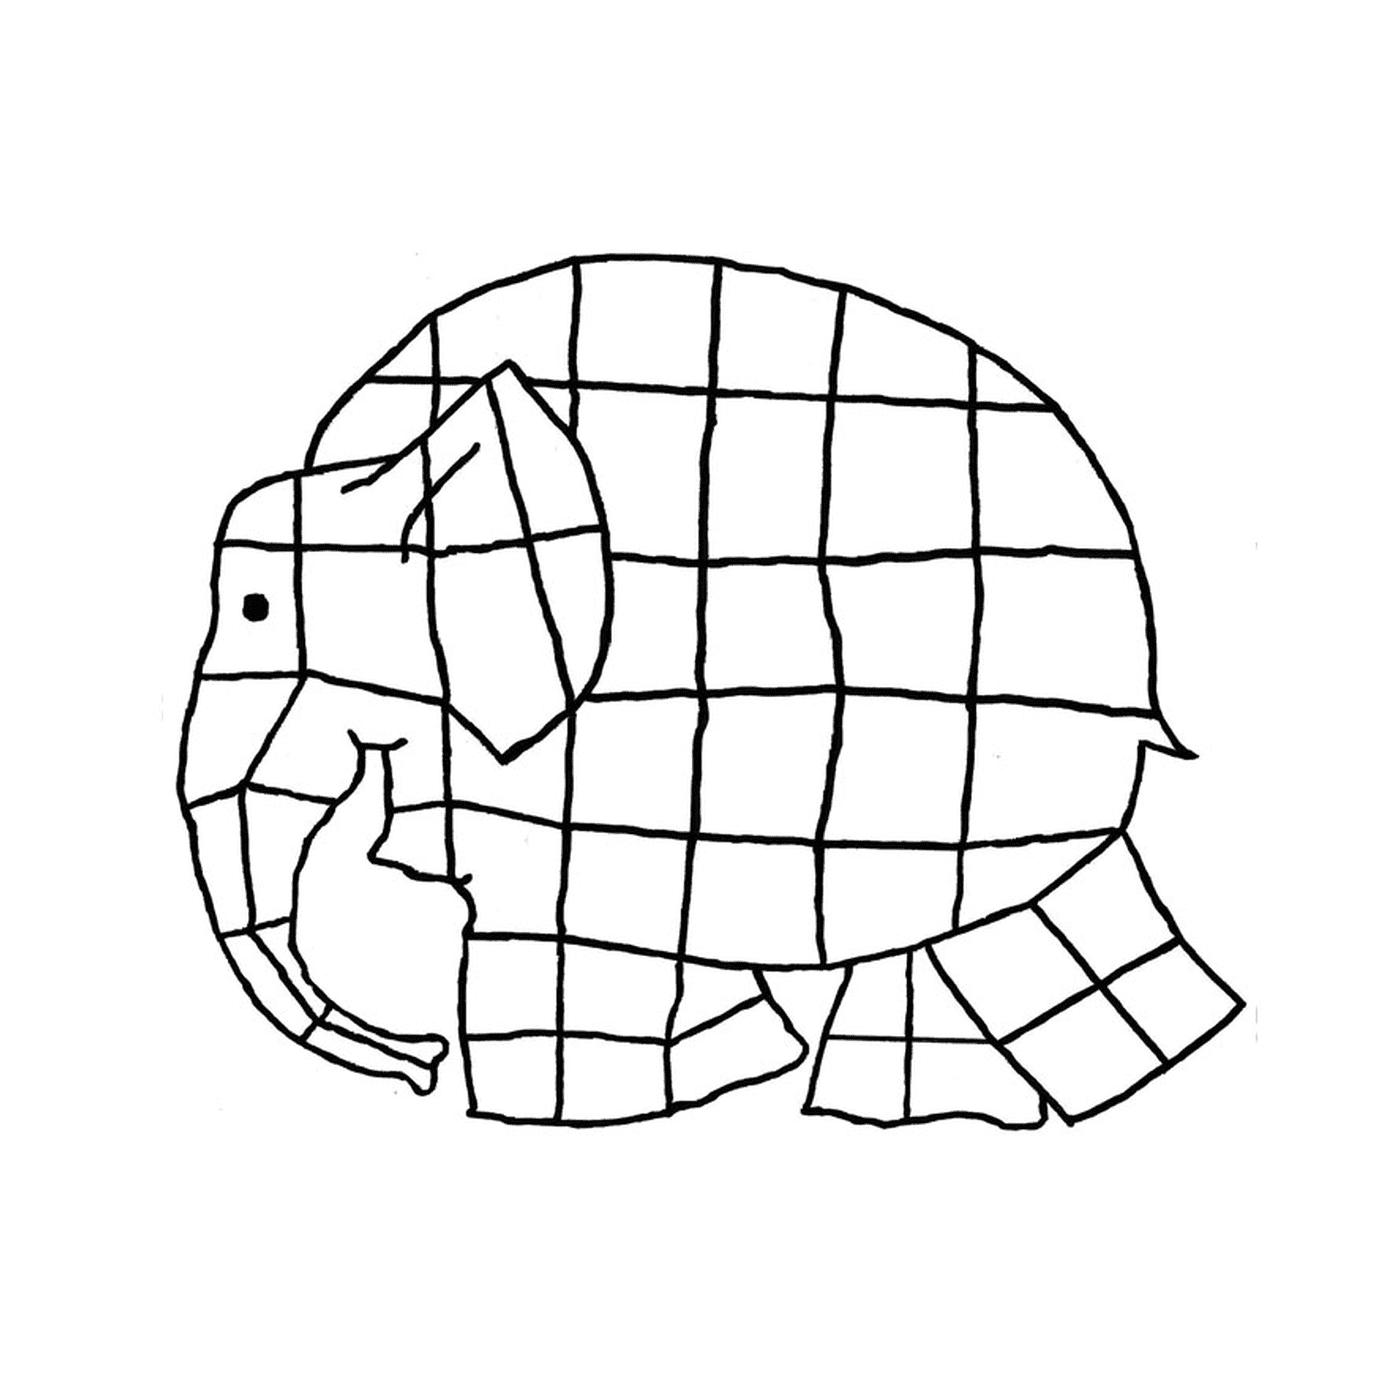  An elephant made of squares 